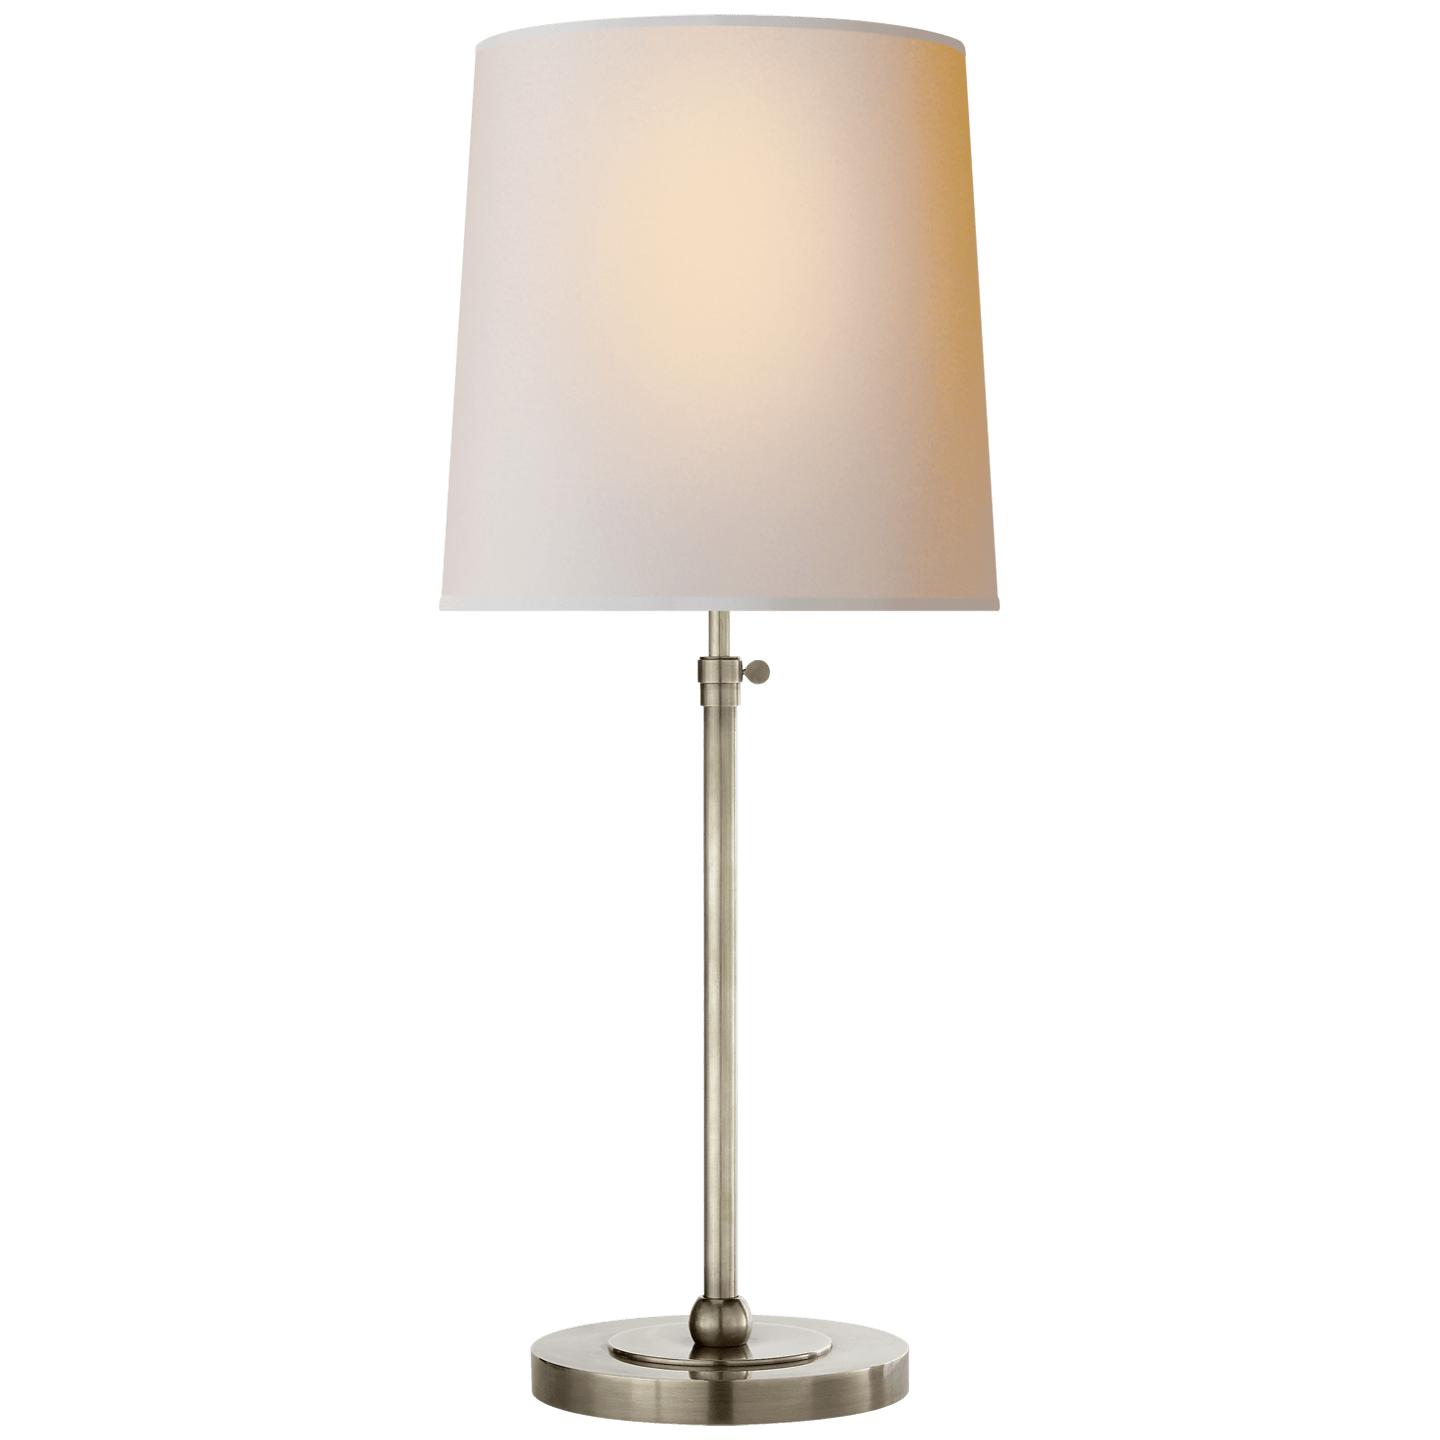 Купить Настольная лампа Bryant Large Table Lamp в интернет-магазине roooms.ru